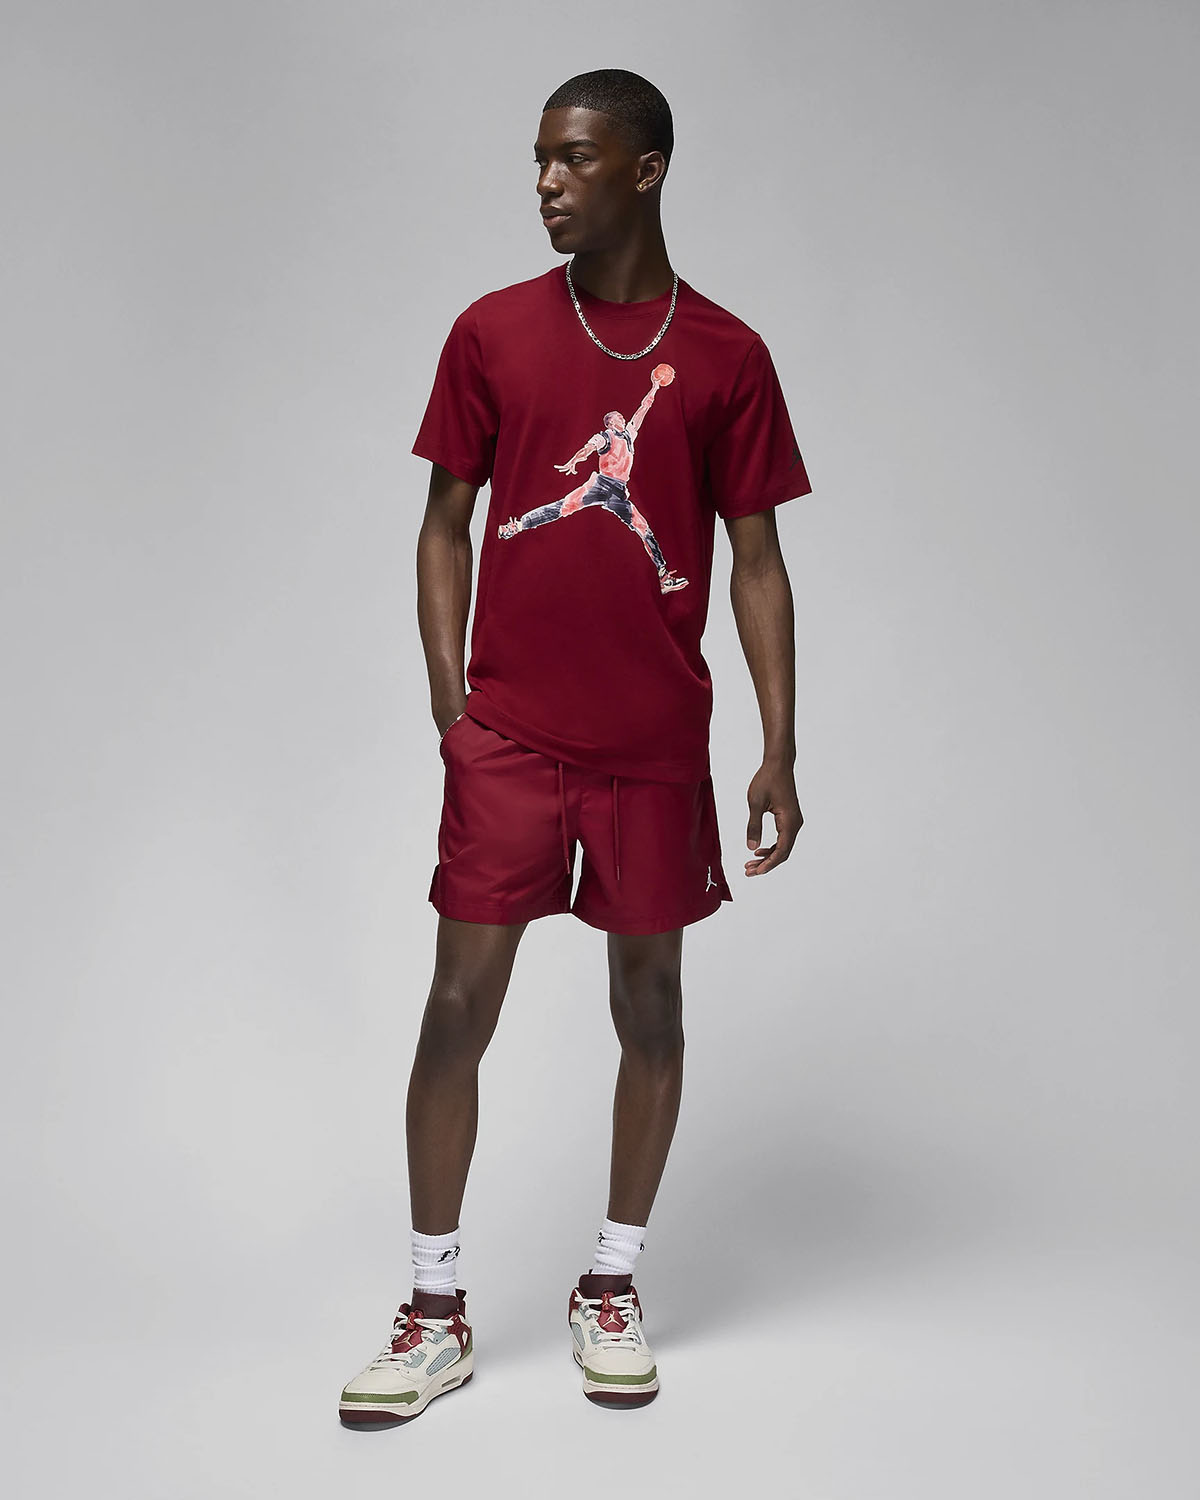 Jordan Team Red Shirt Shirts Red Outfit